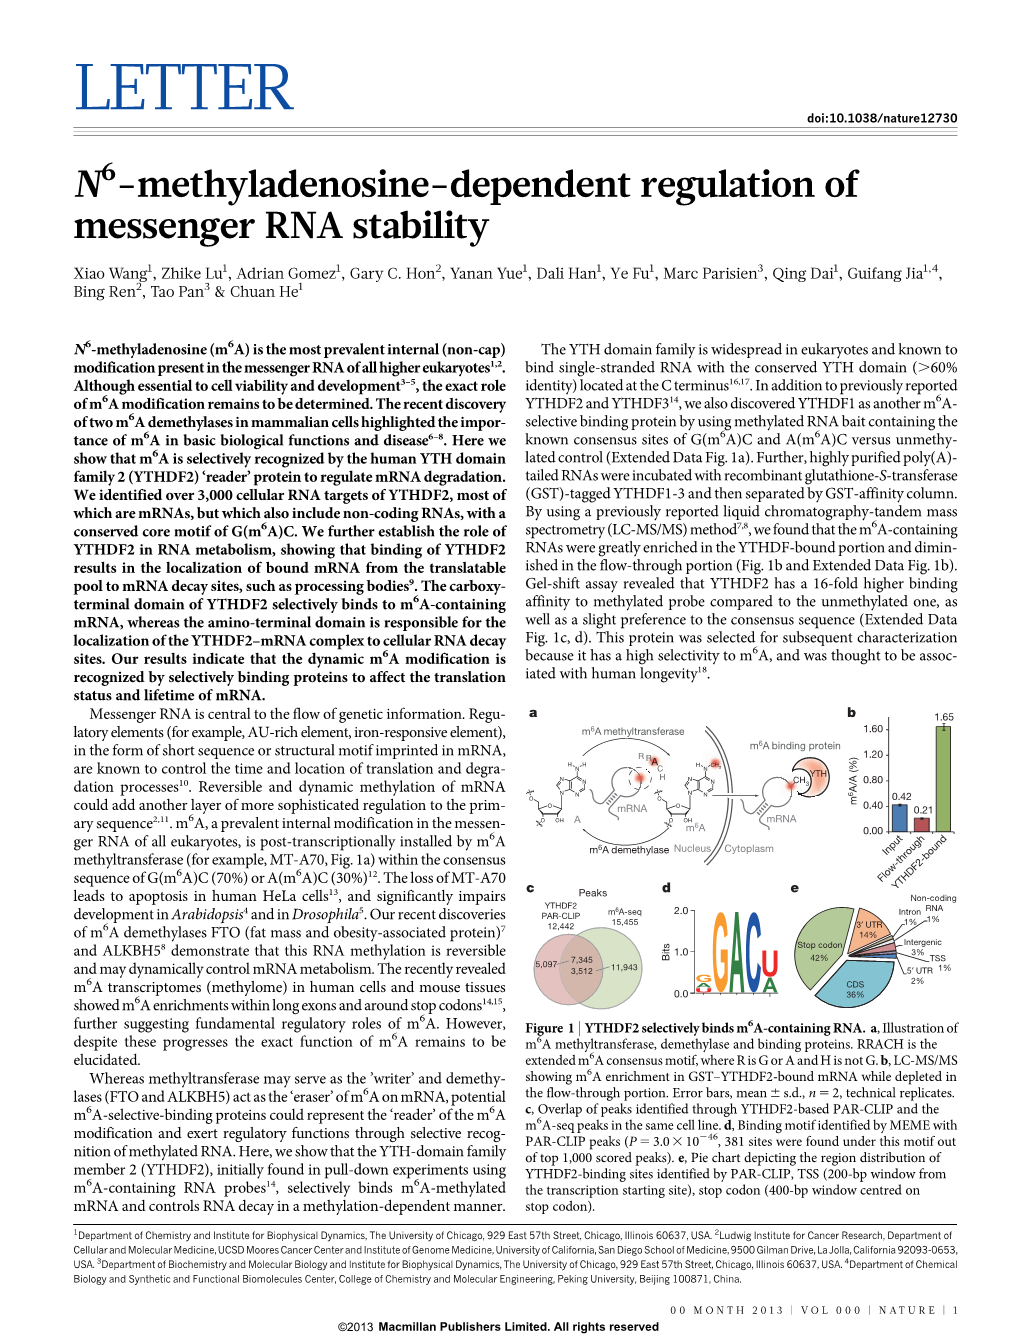 N6-Methyladenosine-Dependent Regulation of Messenger RNA Stability